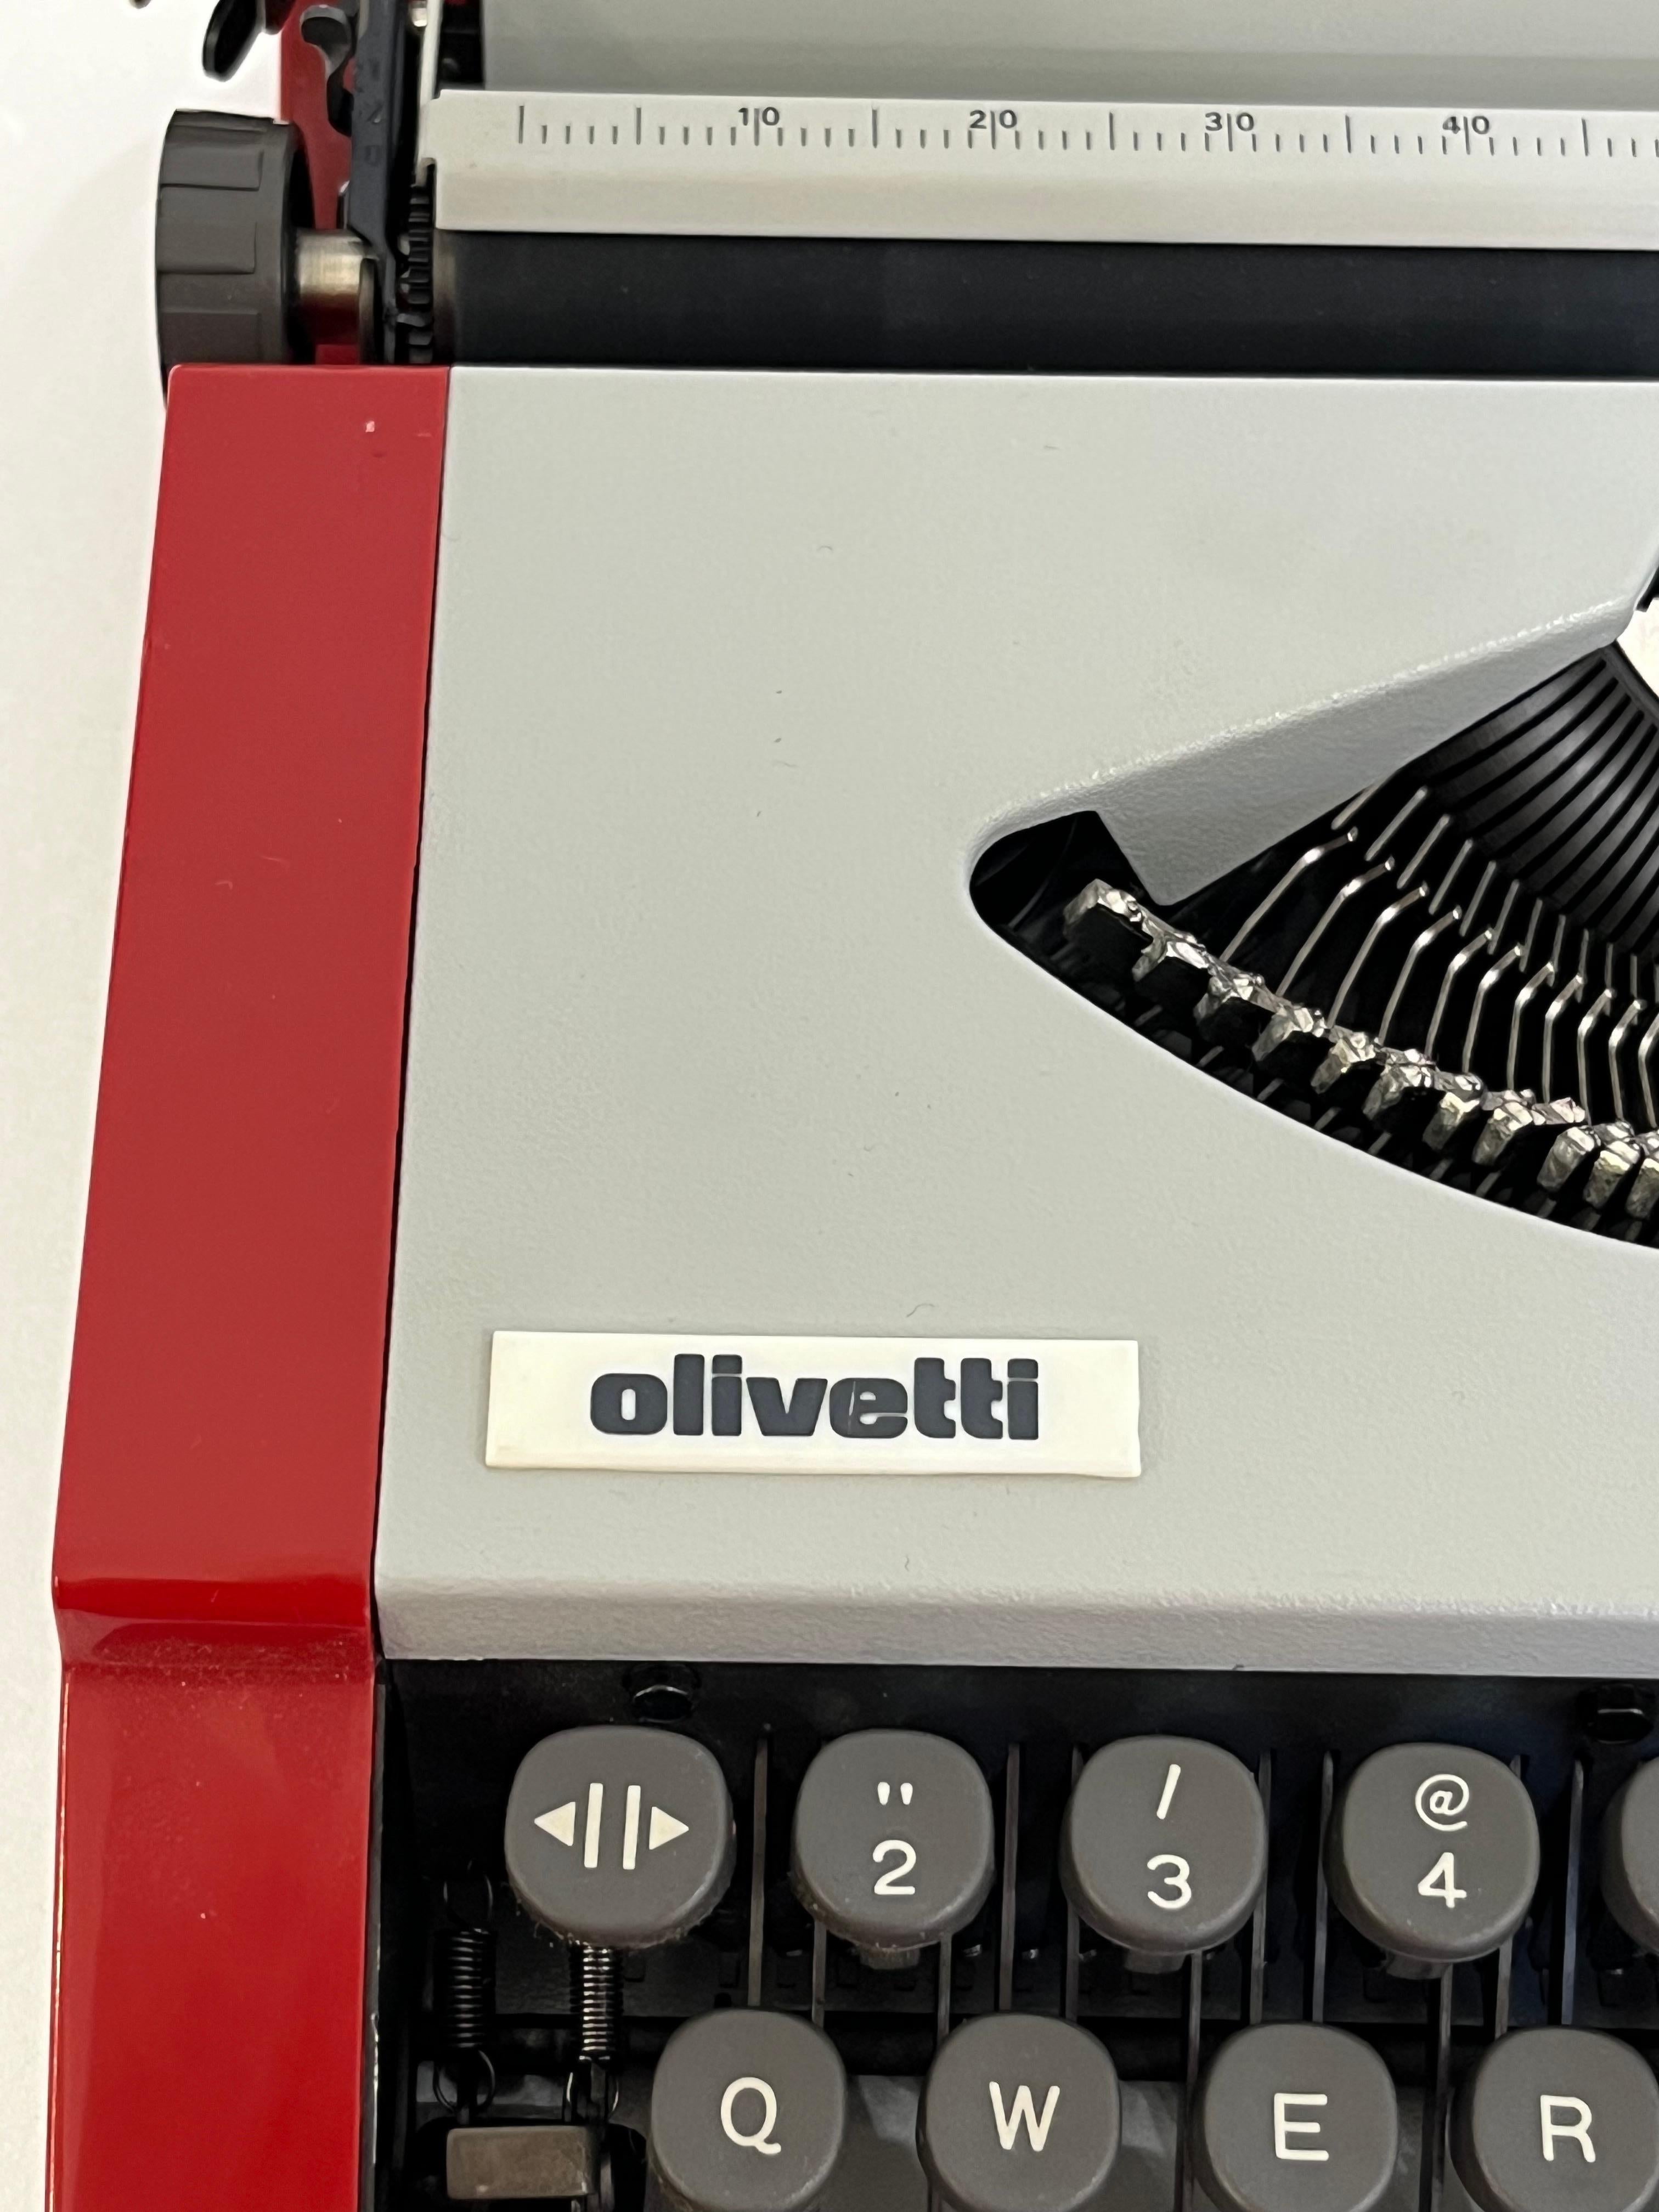 olivetti tropical typewriter